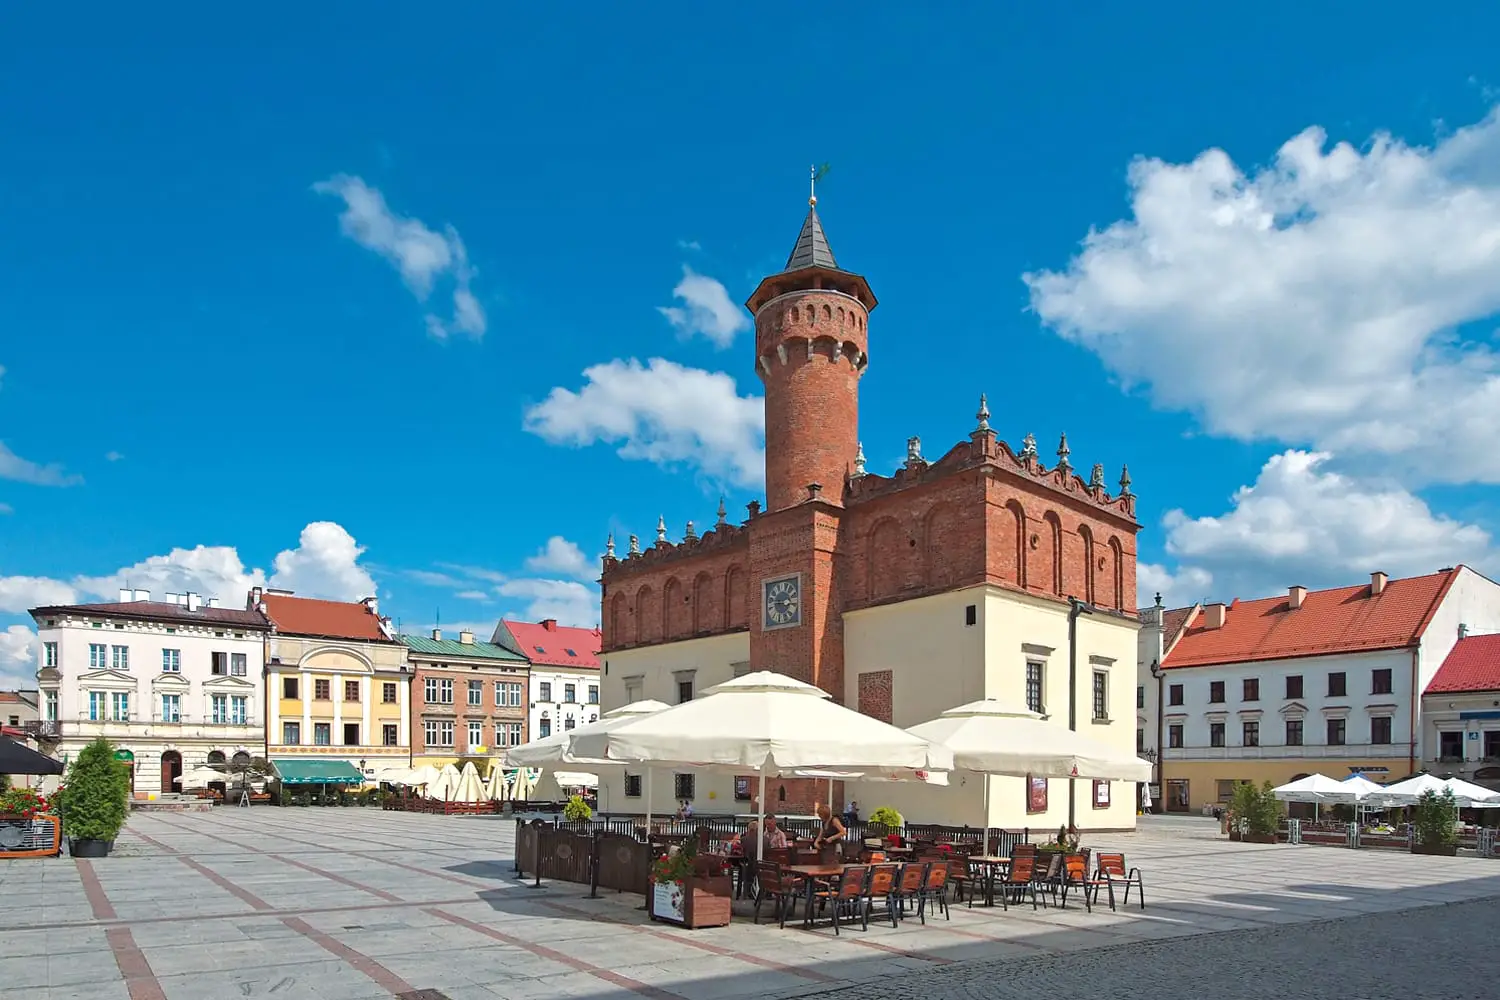 Market Square in Tarnow, Poland